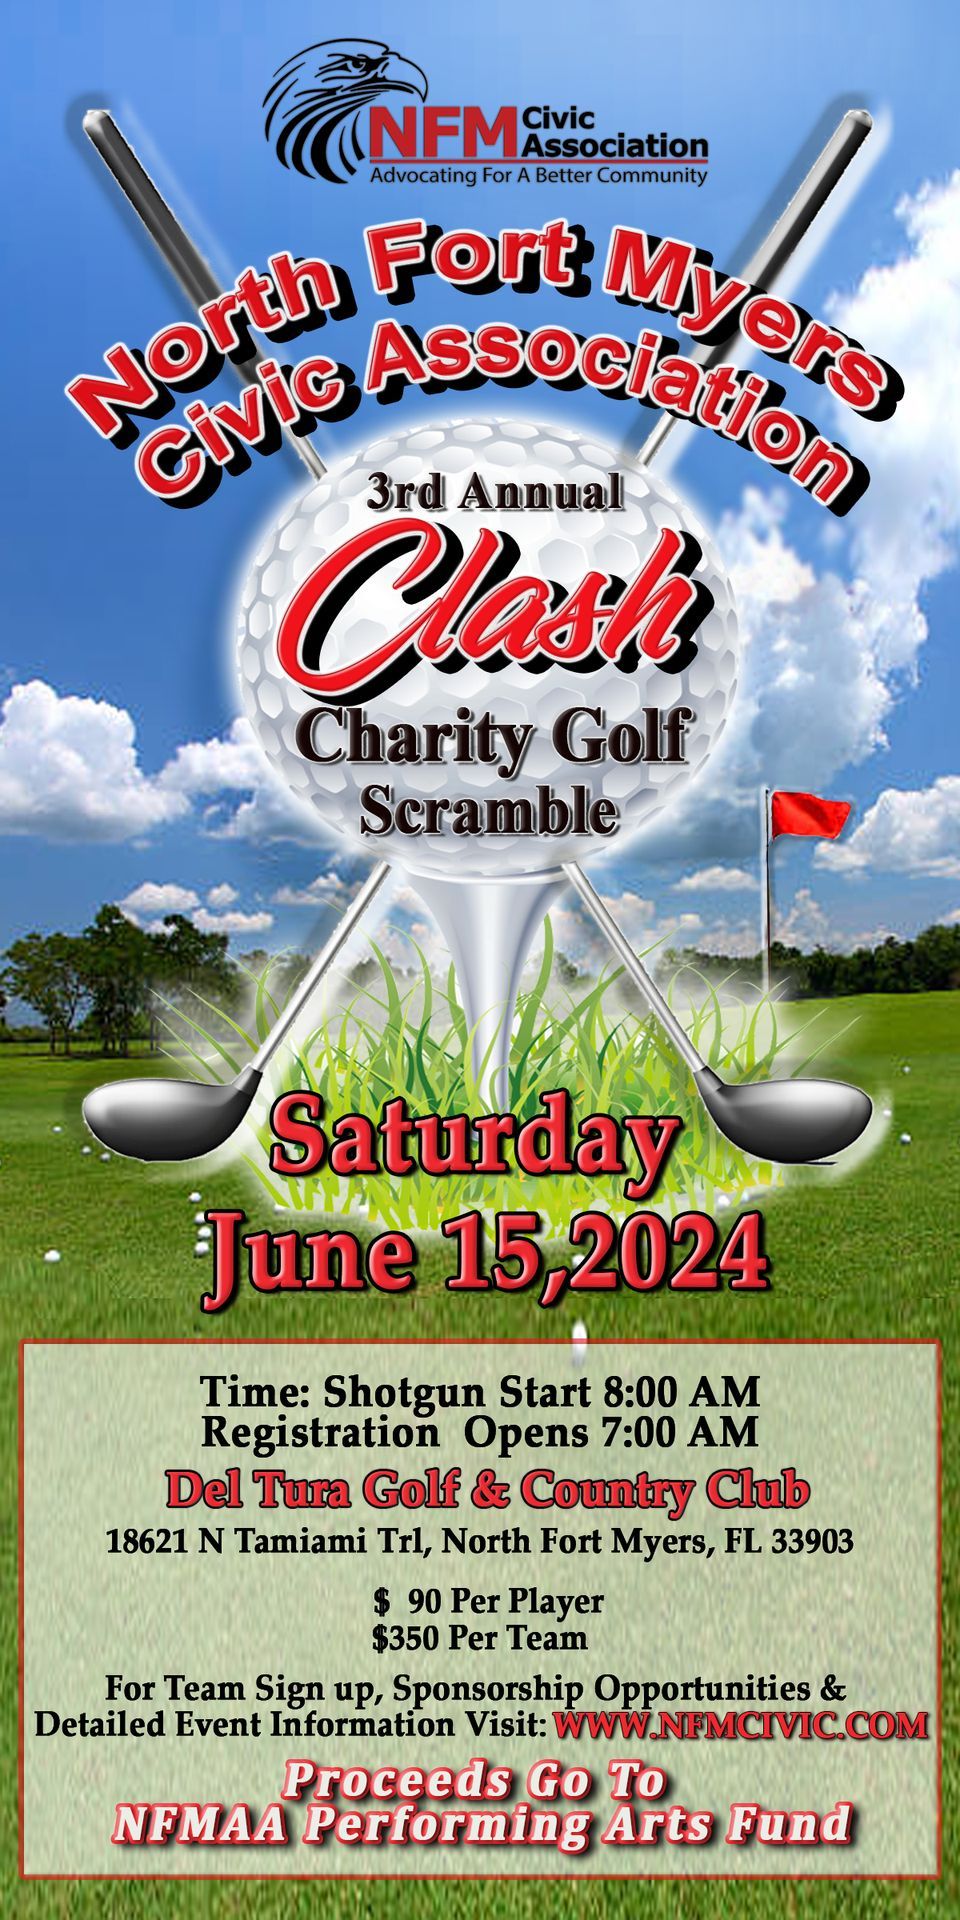 North Fort Myers Civic Association CLASH Charity Golf Scramble